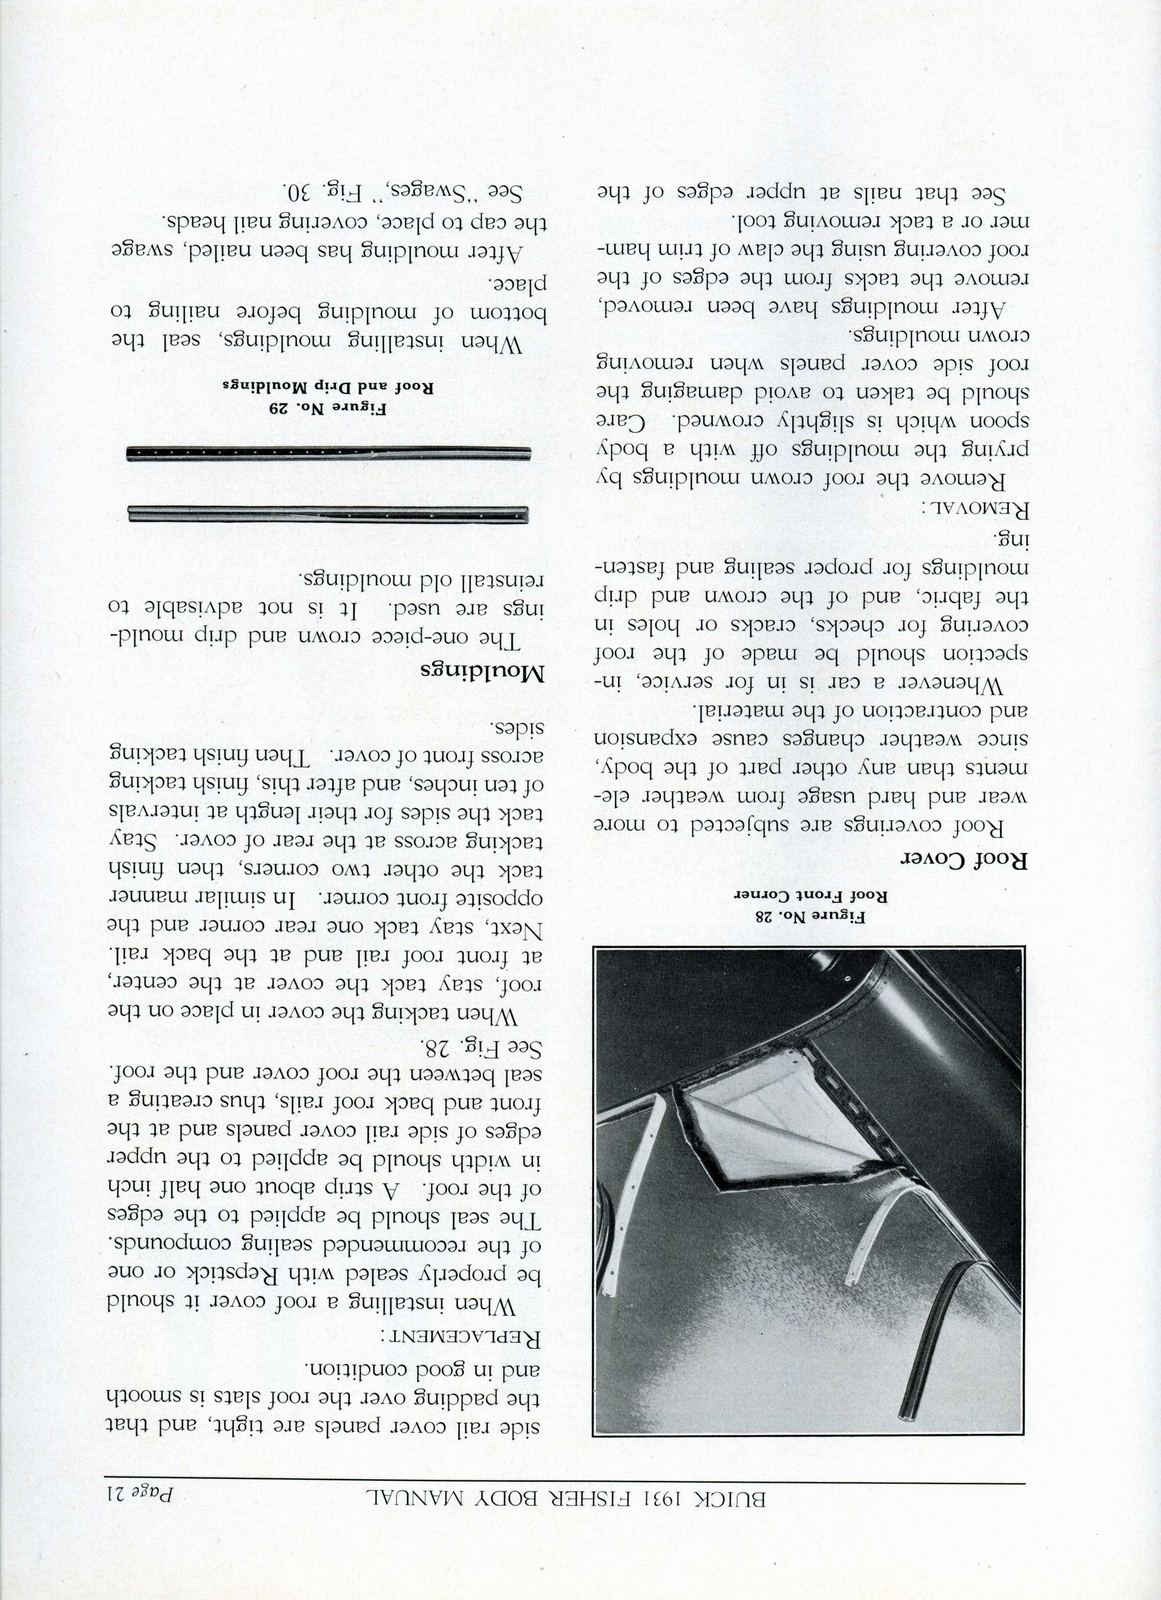 n_1931 Buick Fisher Body Manual-21.jpg